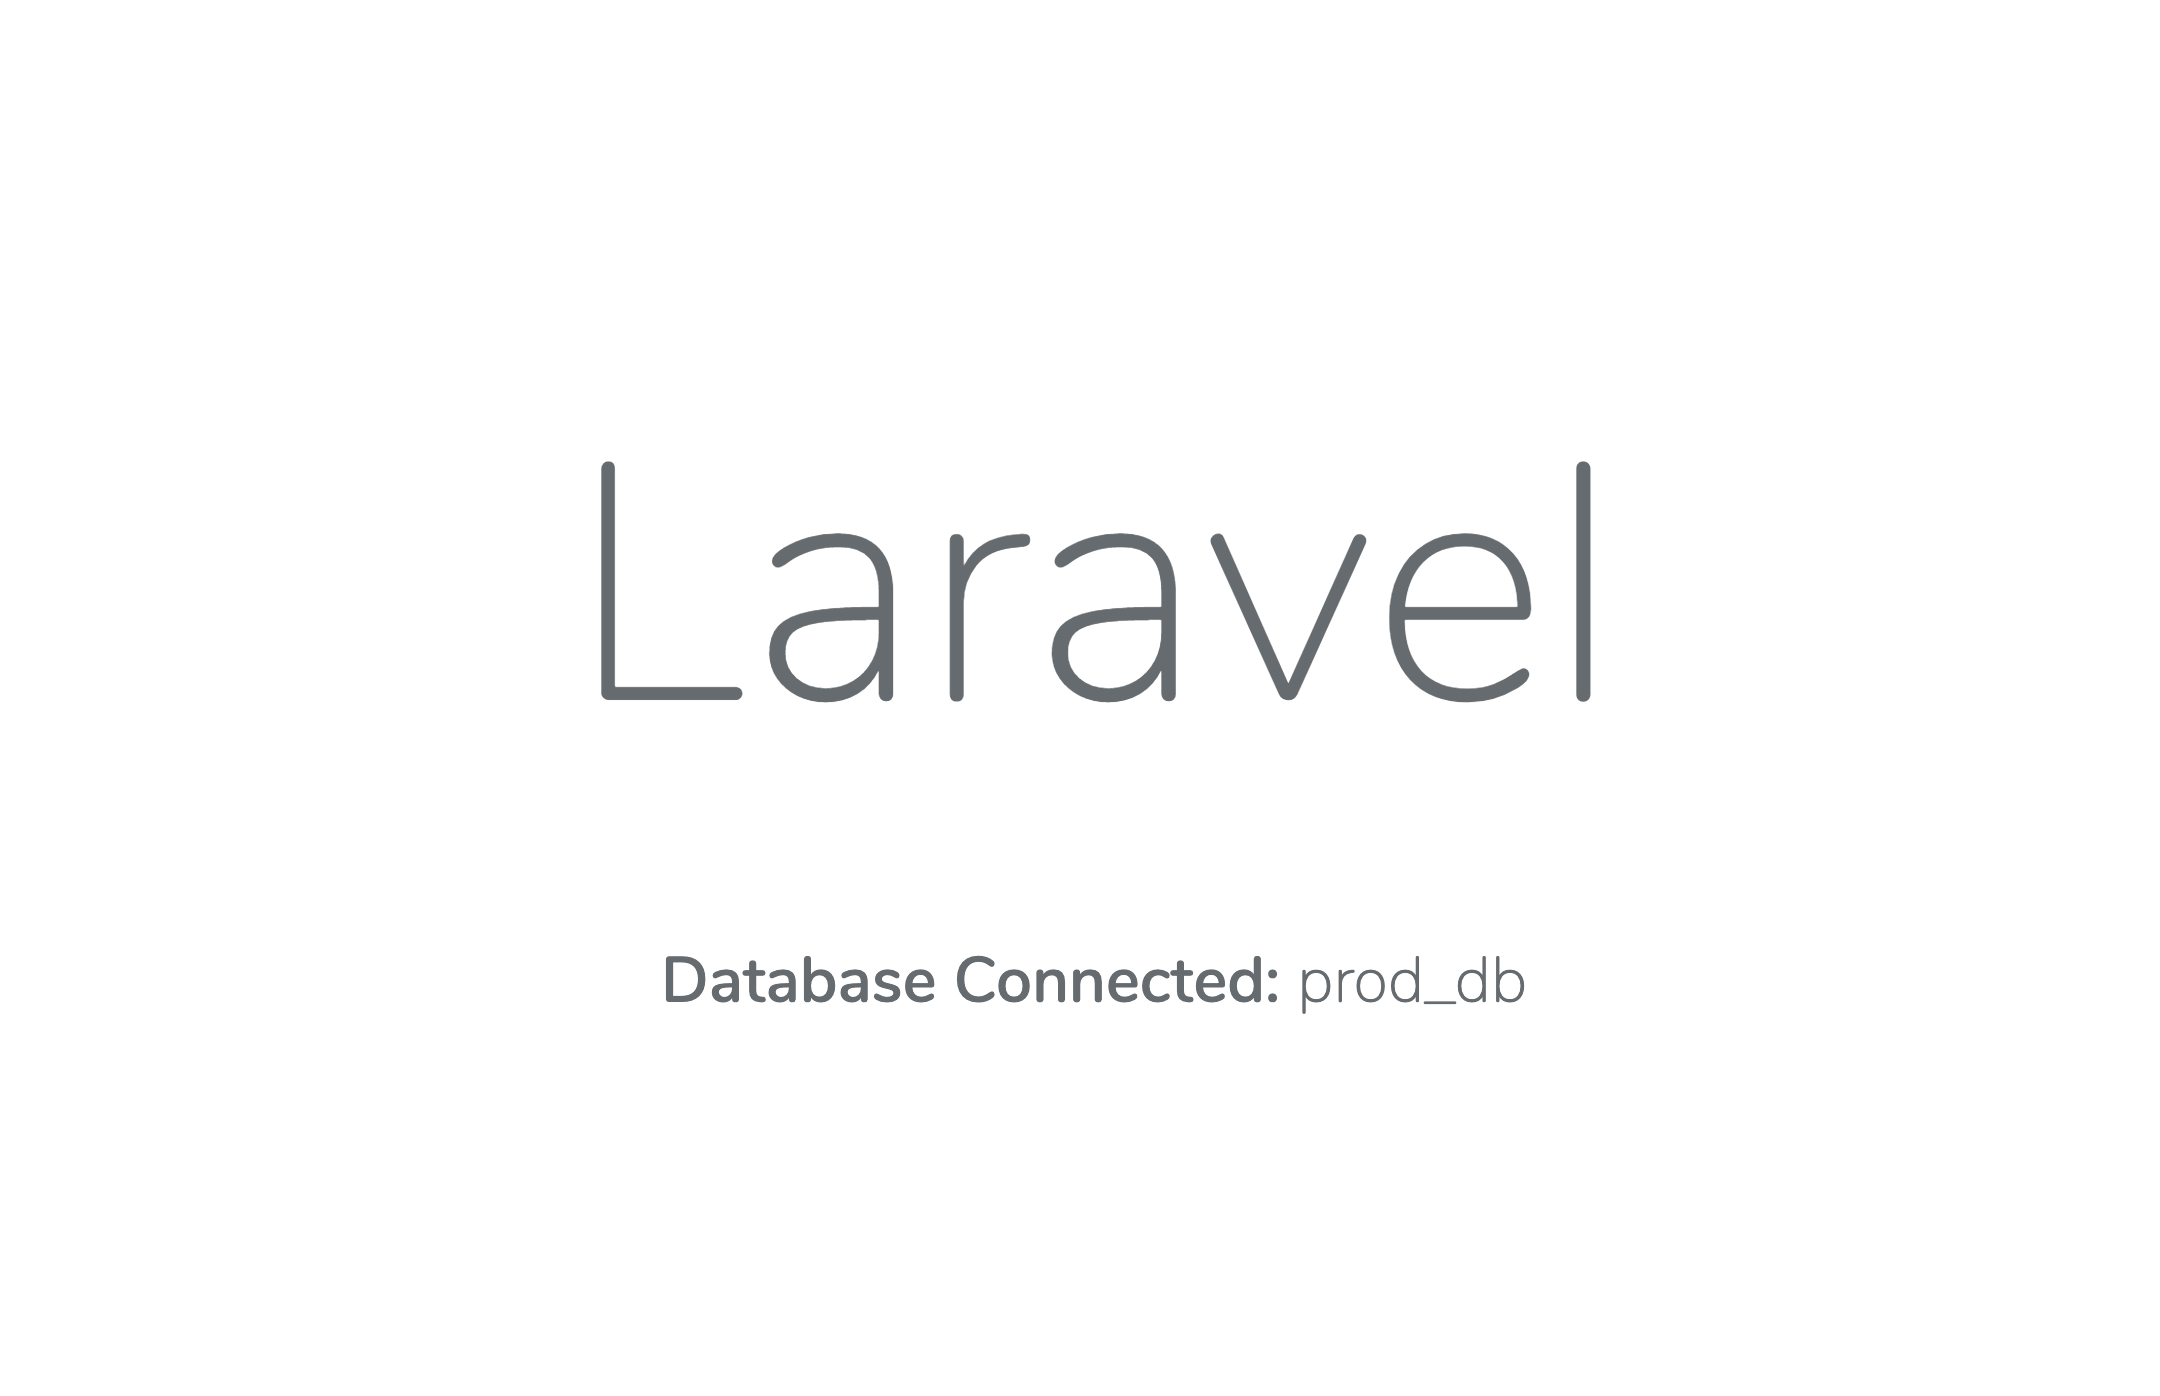 The Laravel application running on Kubernetes using the LAMP Helm chart